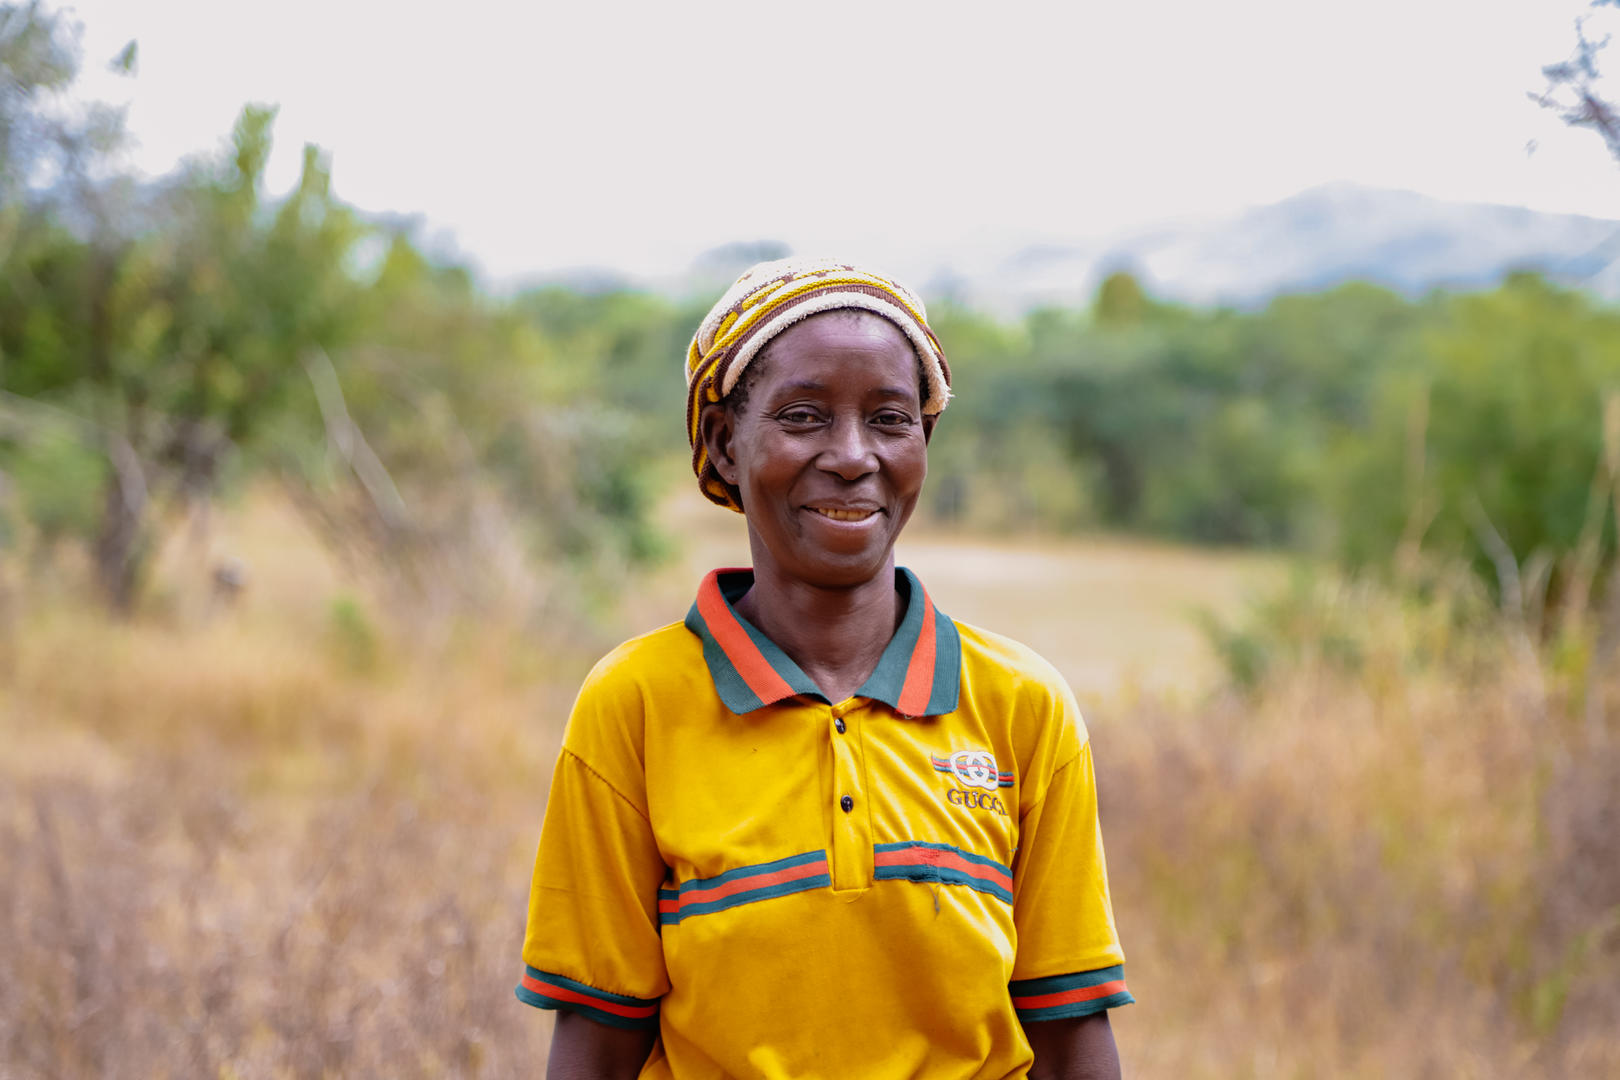 Photo of Malawian woman Anastasia in yellow t-shirt